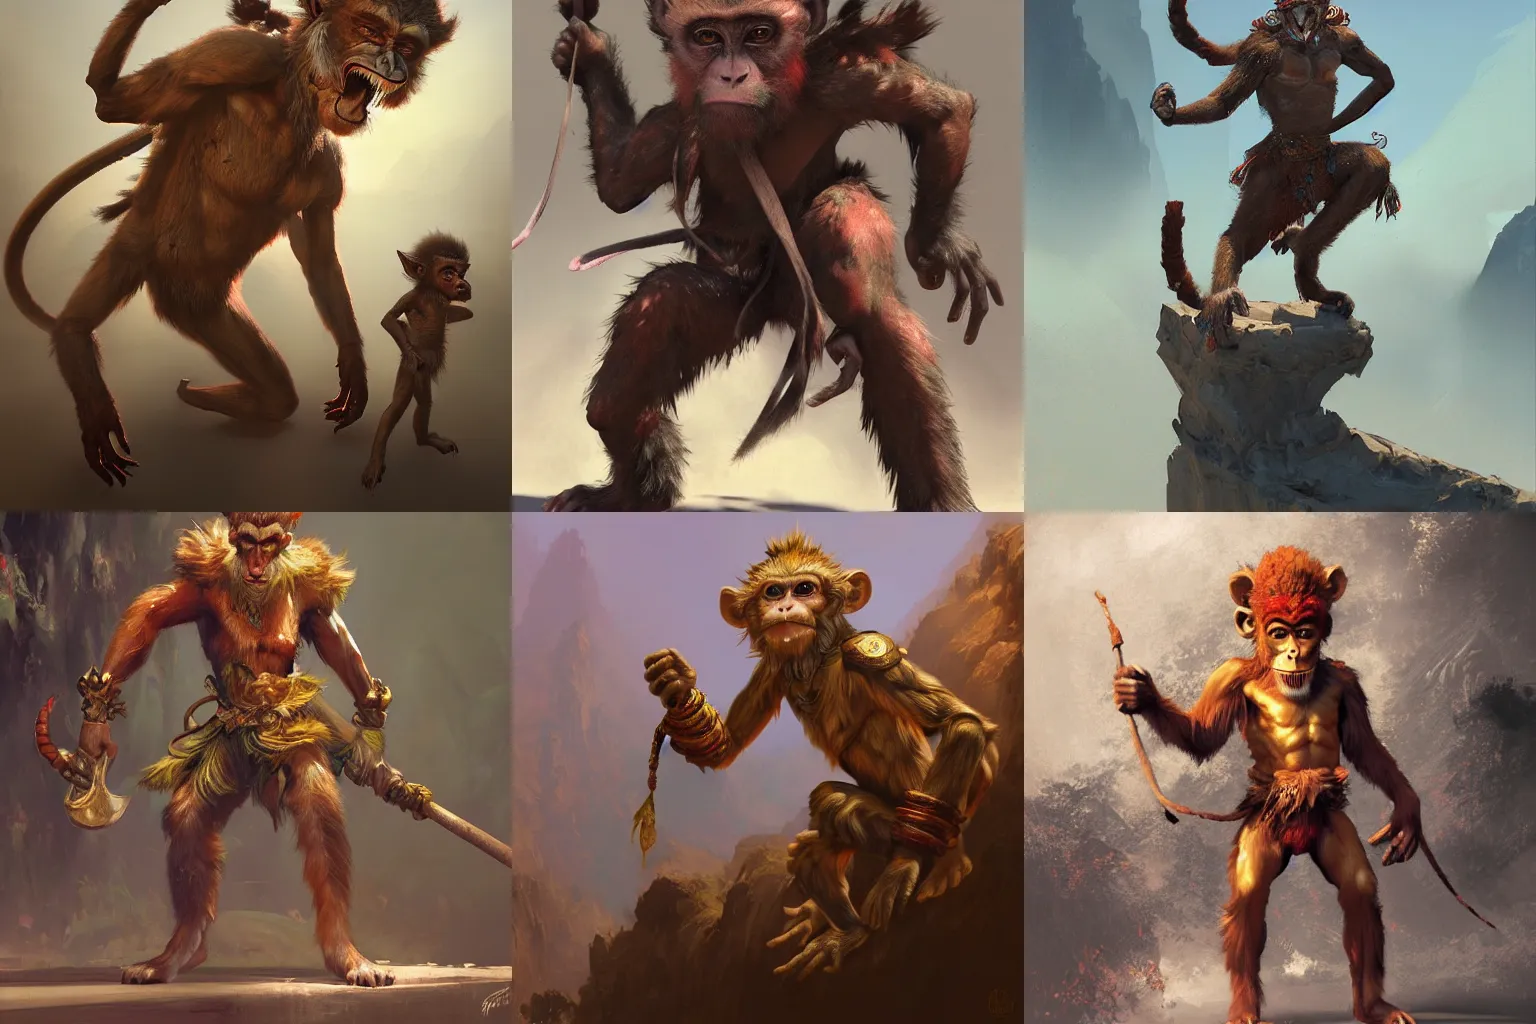 Prompt: humanoid monkey fantasy race ,wukong, monkey king, by craig mullins, featured on artstation